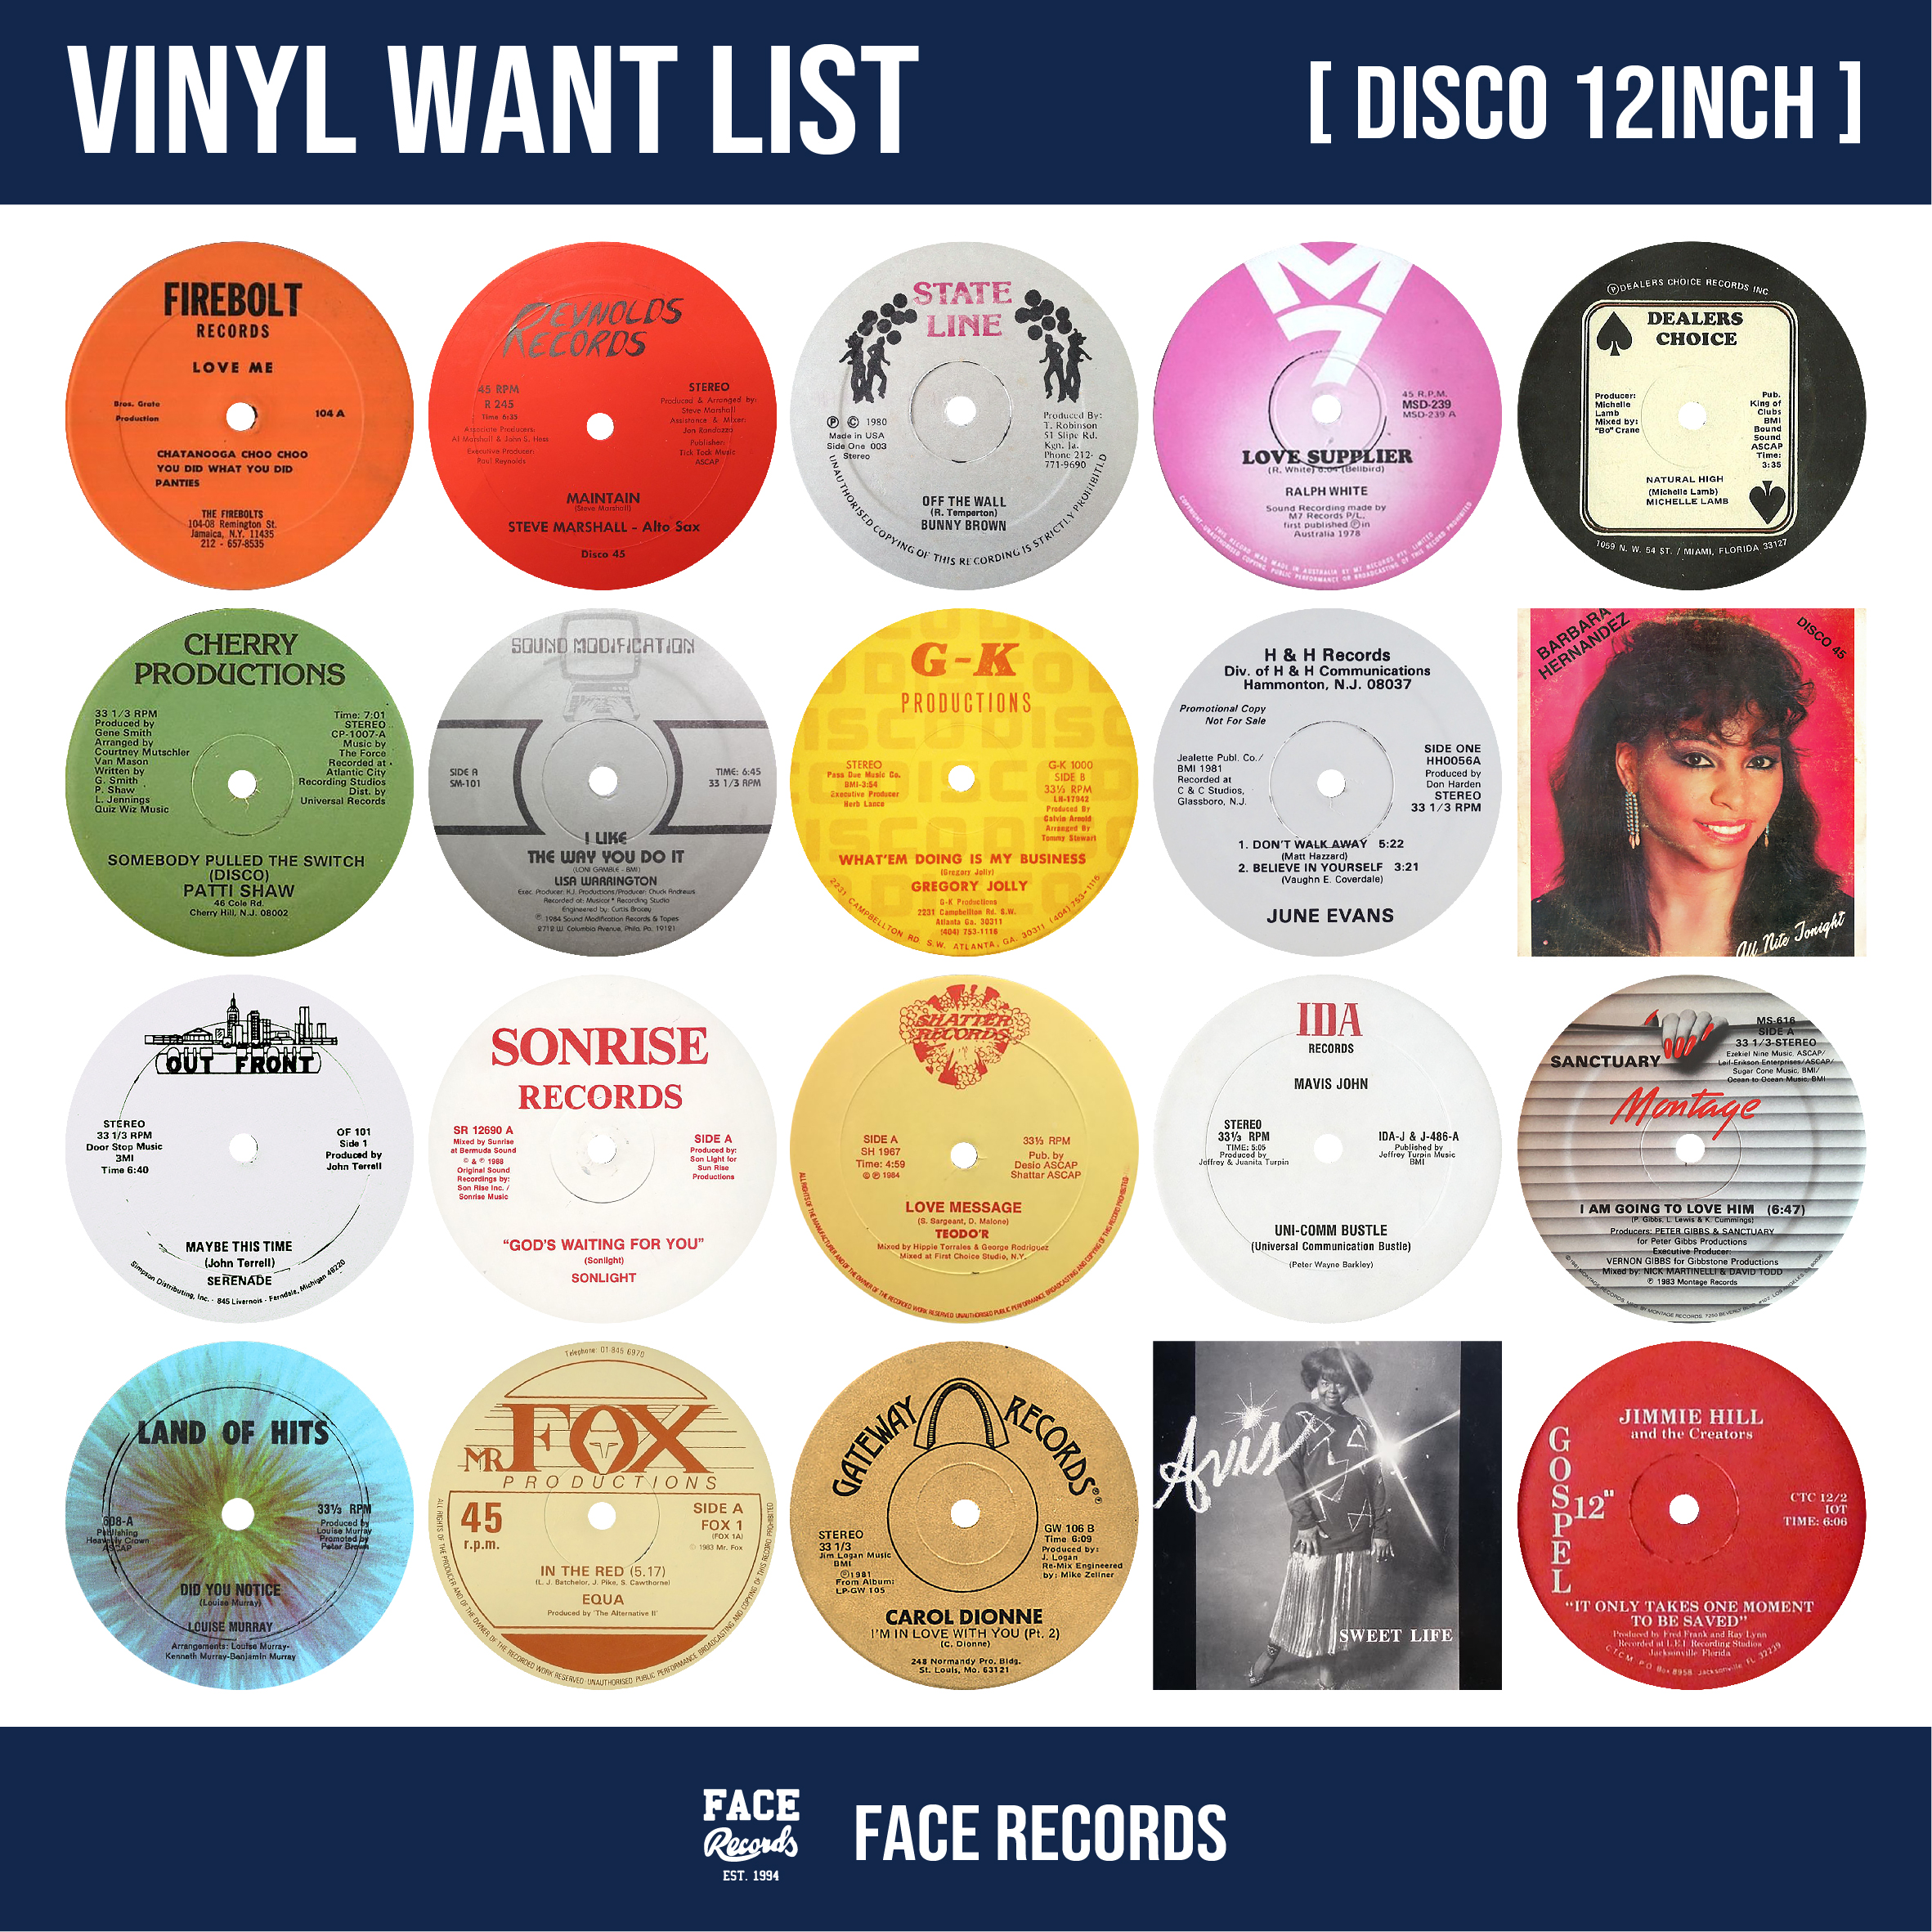 《FACE RECORDS VINYL WANT LIST -DISCO 12インチ- 高価買取リスト公開中》